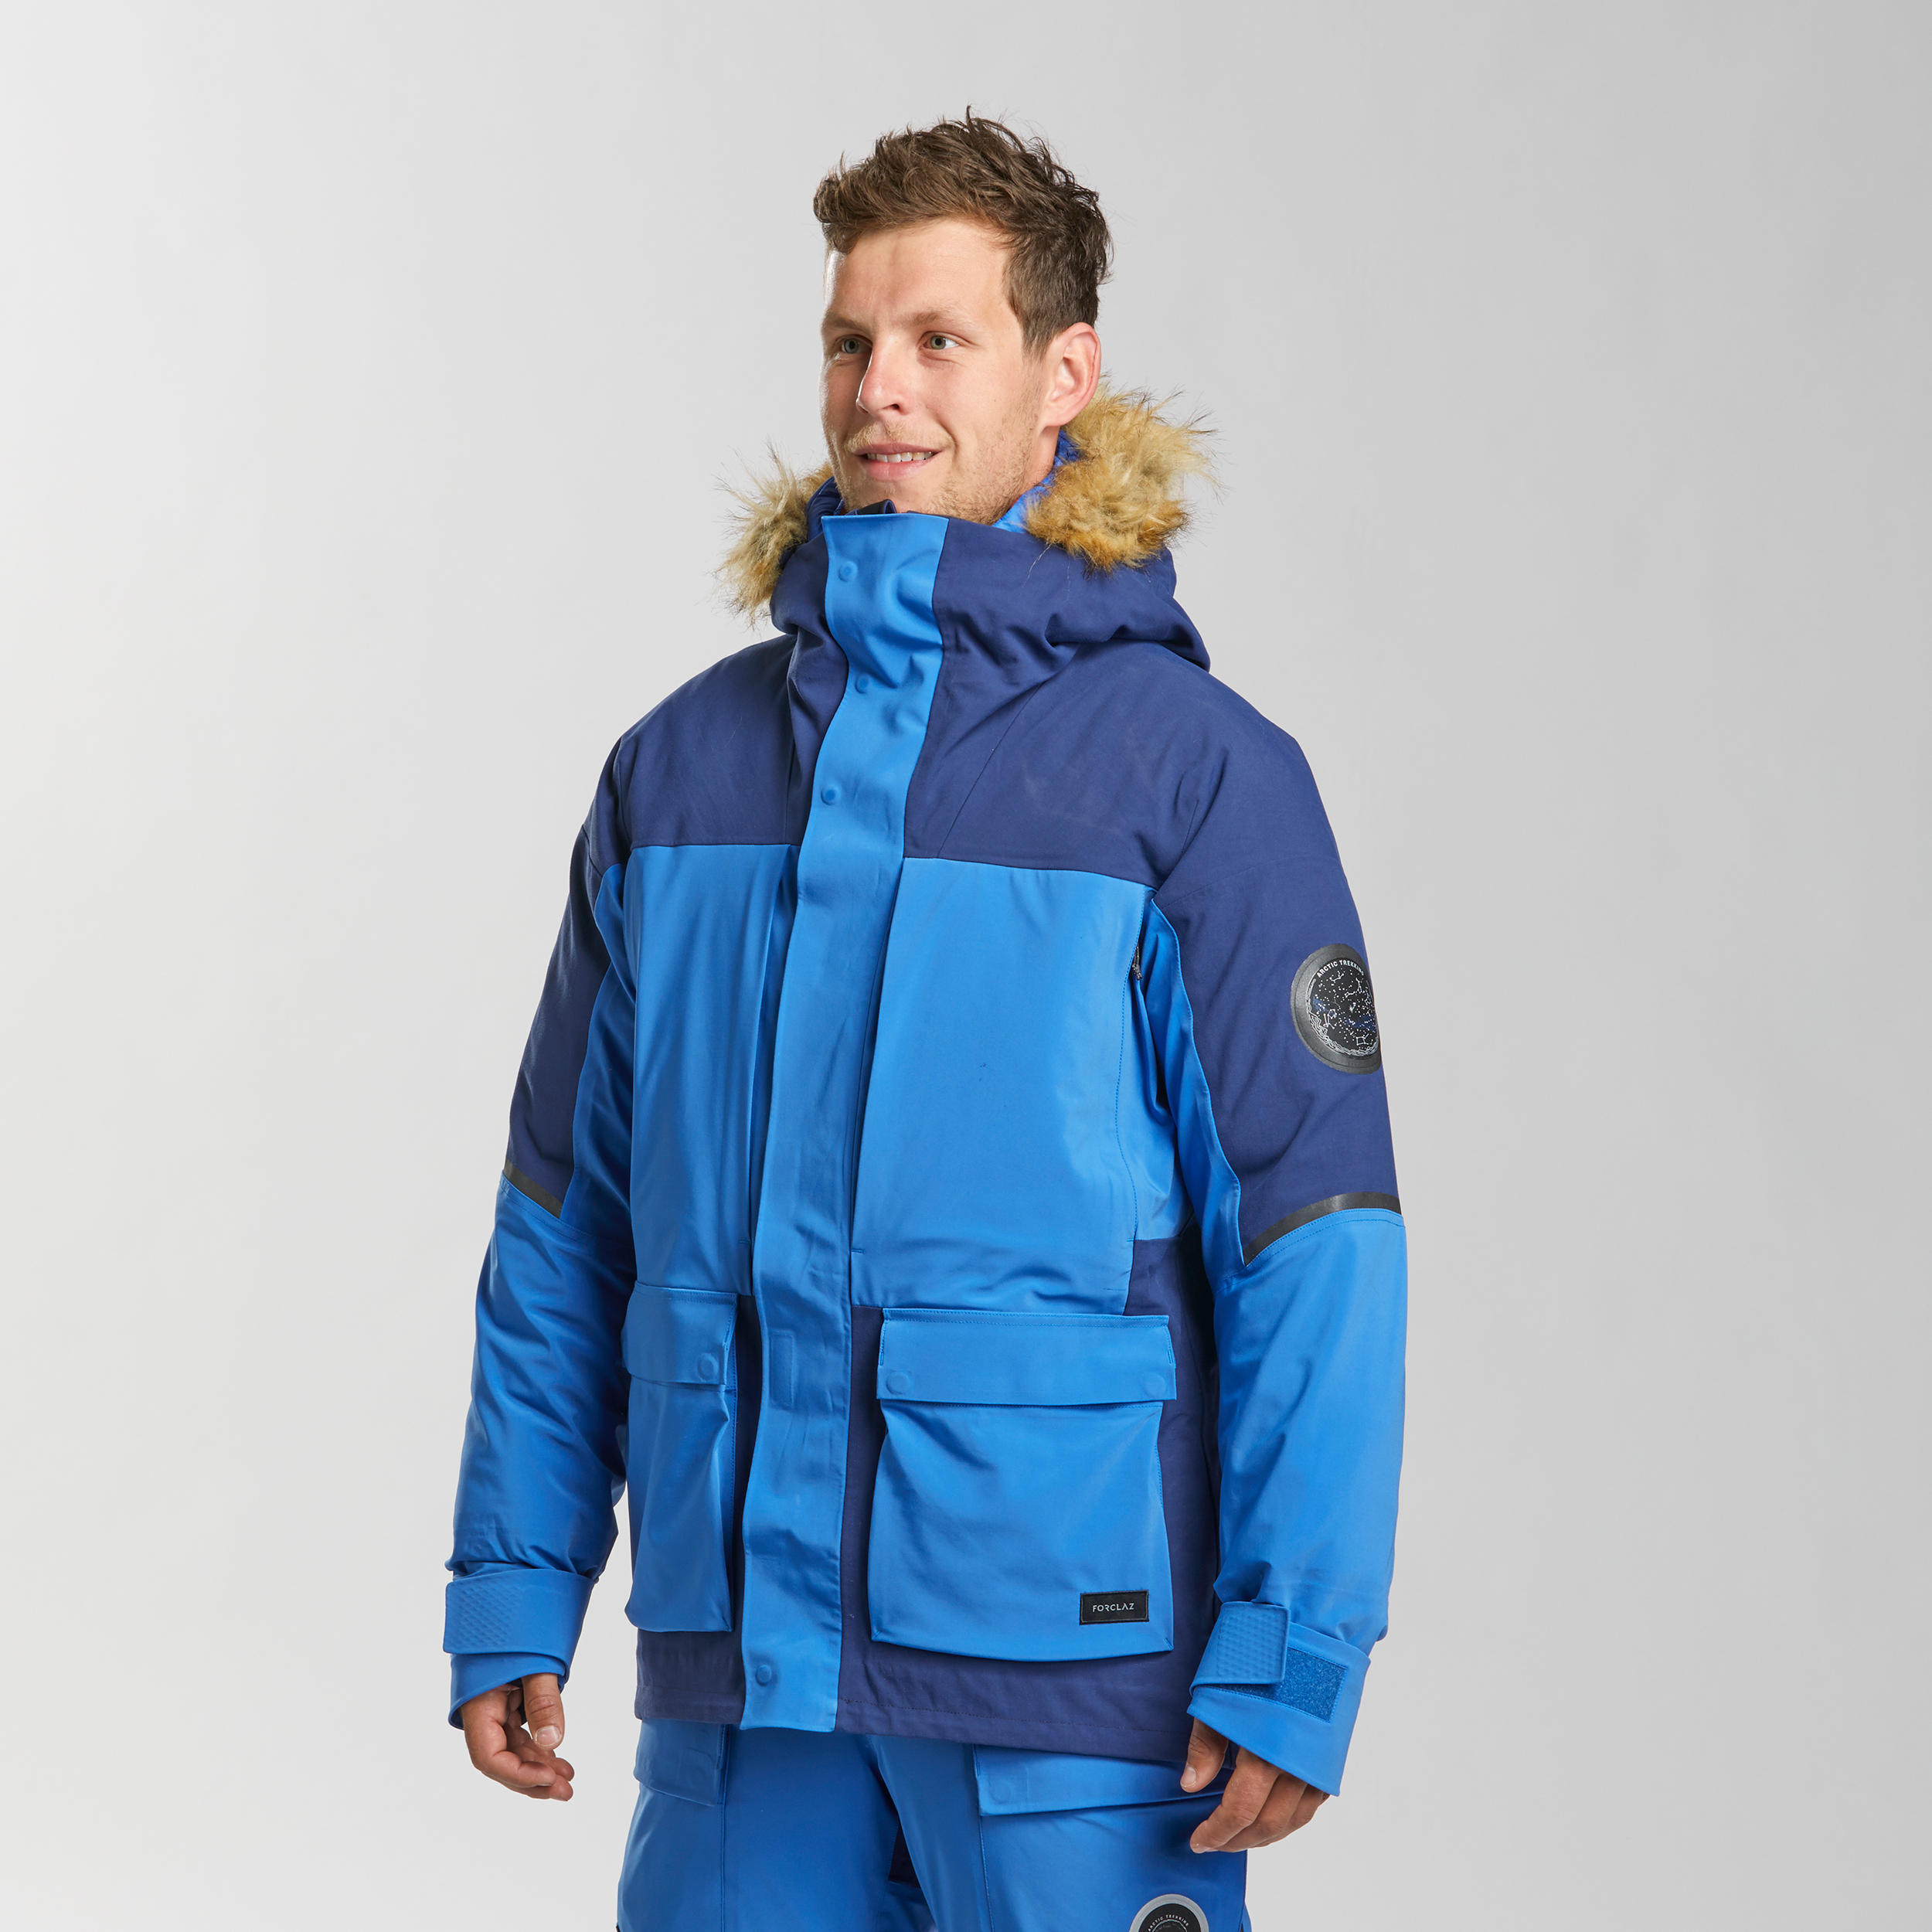 FORCLAZ Men’s 3-in-1 modular trekking parka jacket  - ARCTIC 900